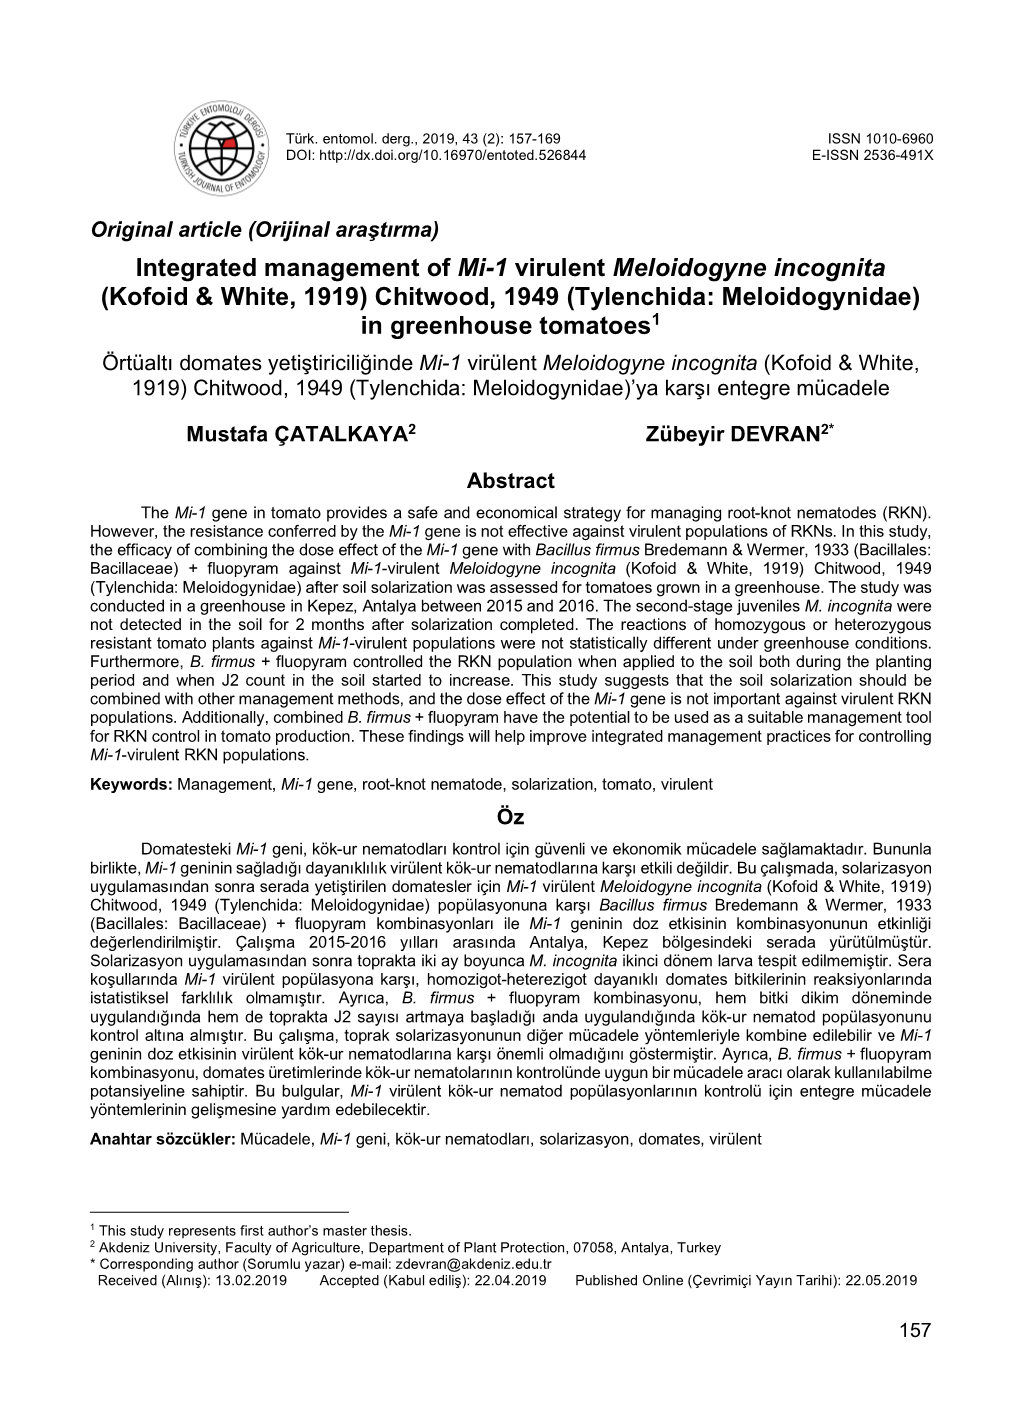 Integrated Management of Mi-1 Virulent Meloidogyne Incognita